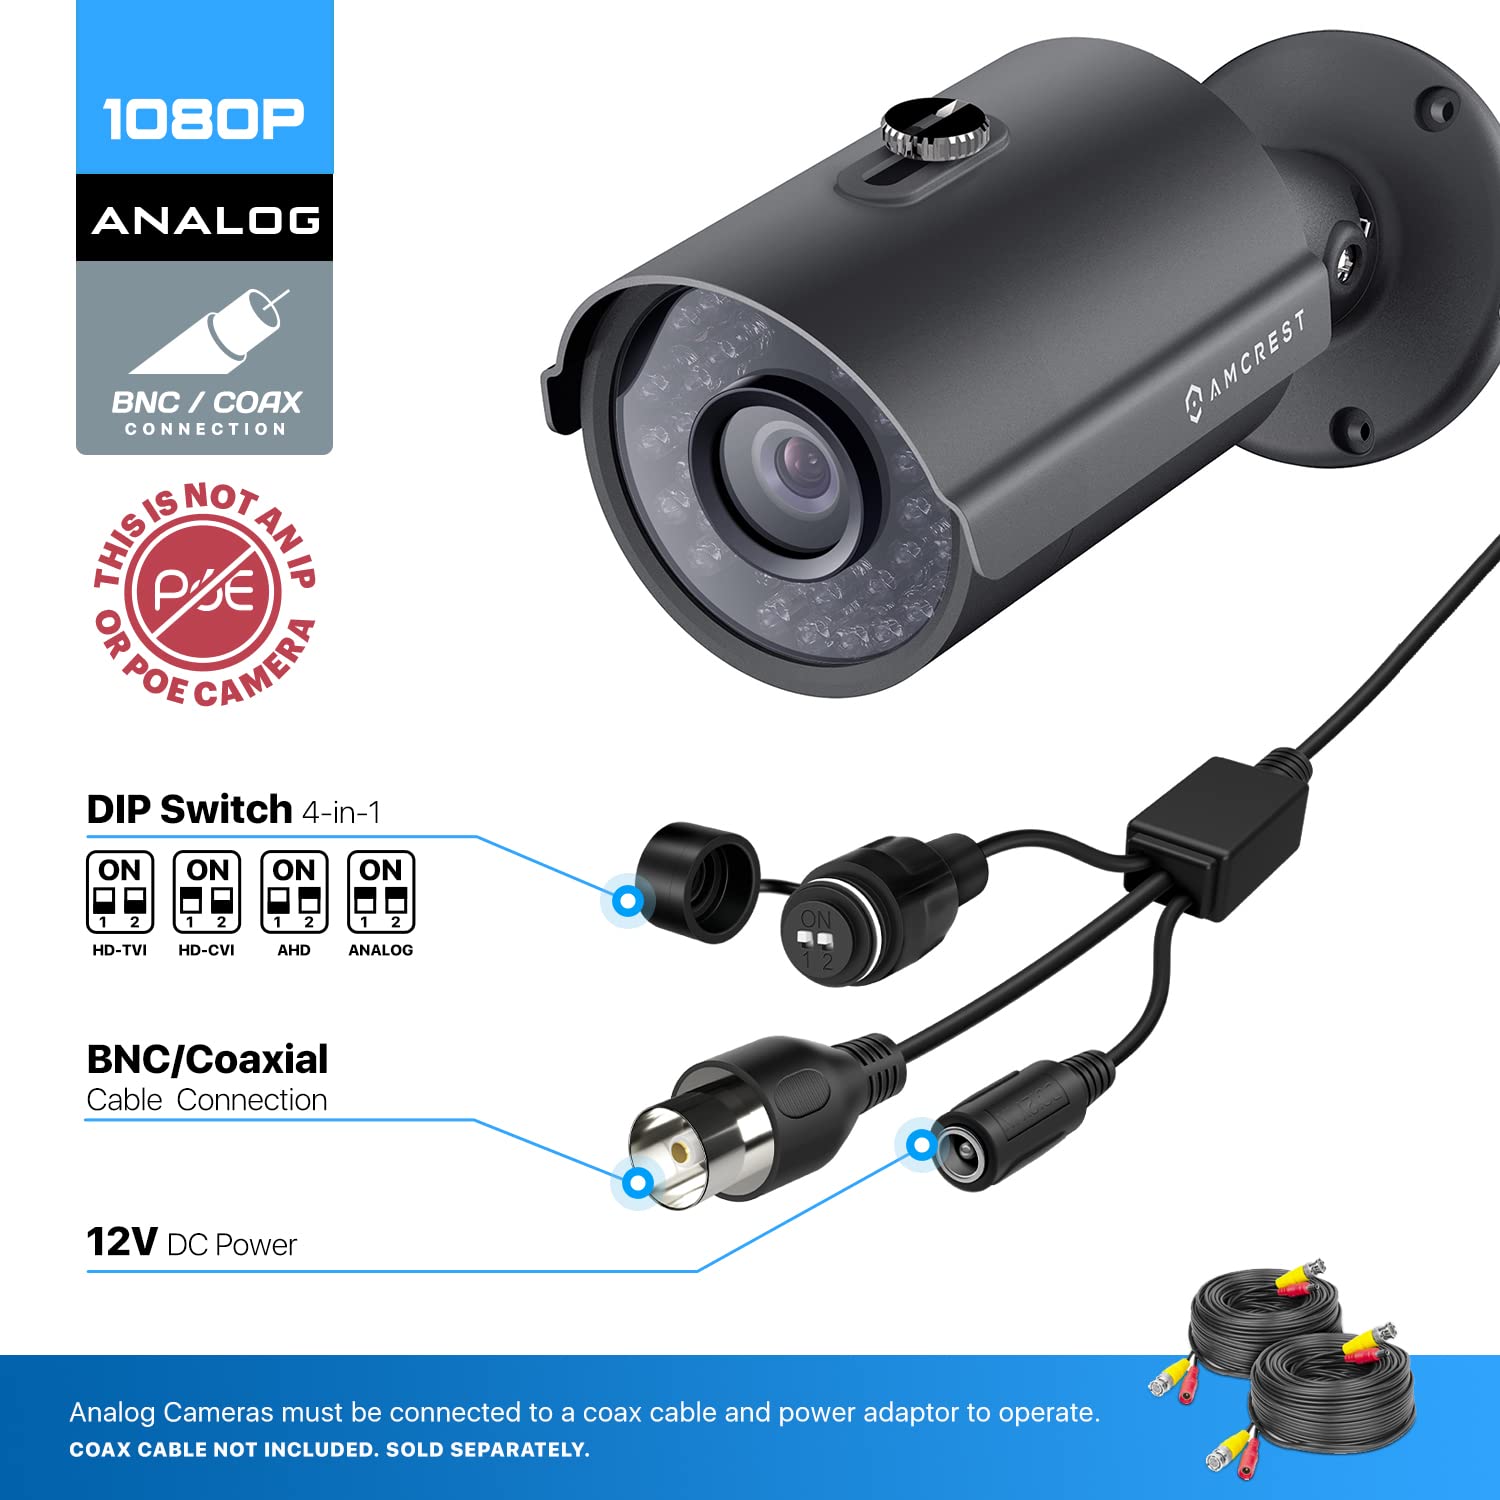 Amcrest 1080p HDCVI Standalone Bullet Camera (Black) (DVR Not Included)